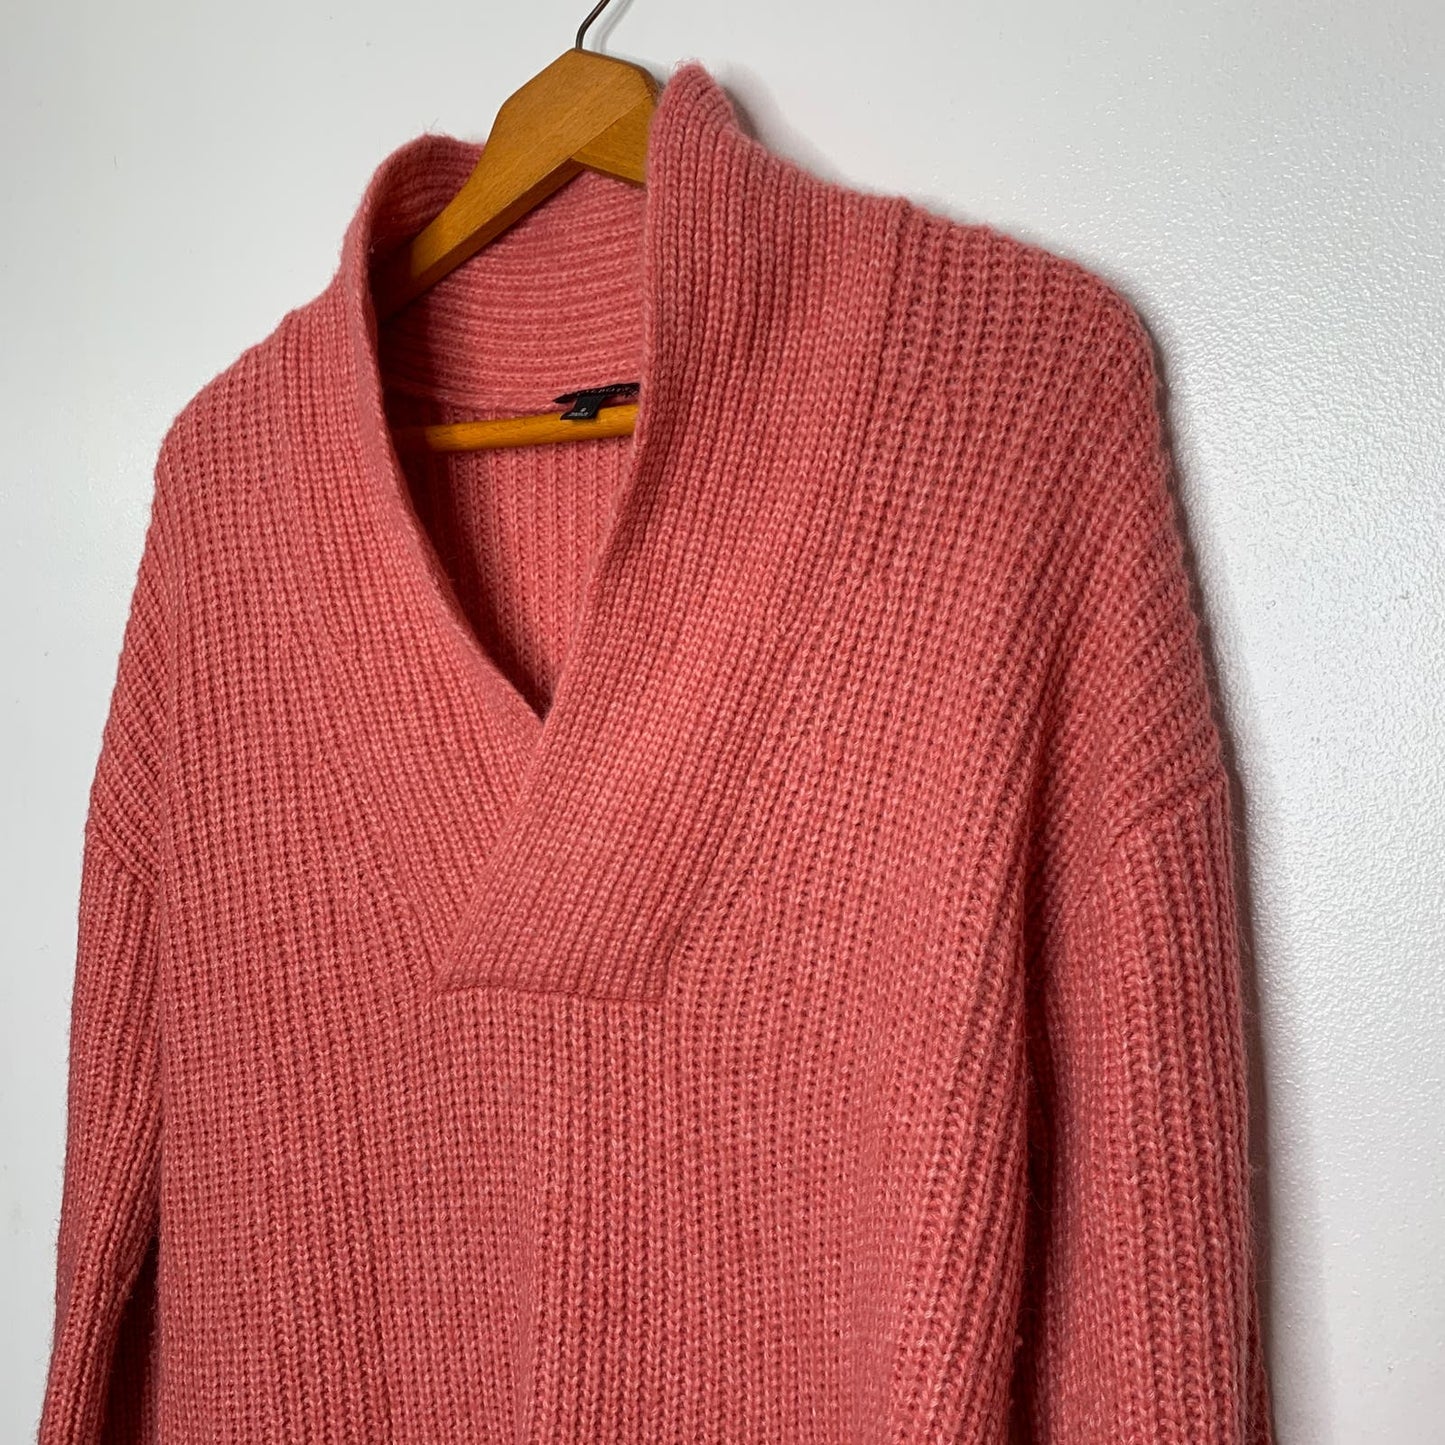 Shawl Collar Shaker Stitch Pullover Sweater SZ S